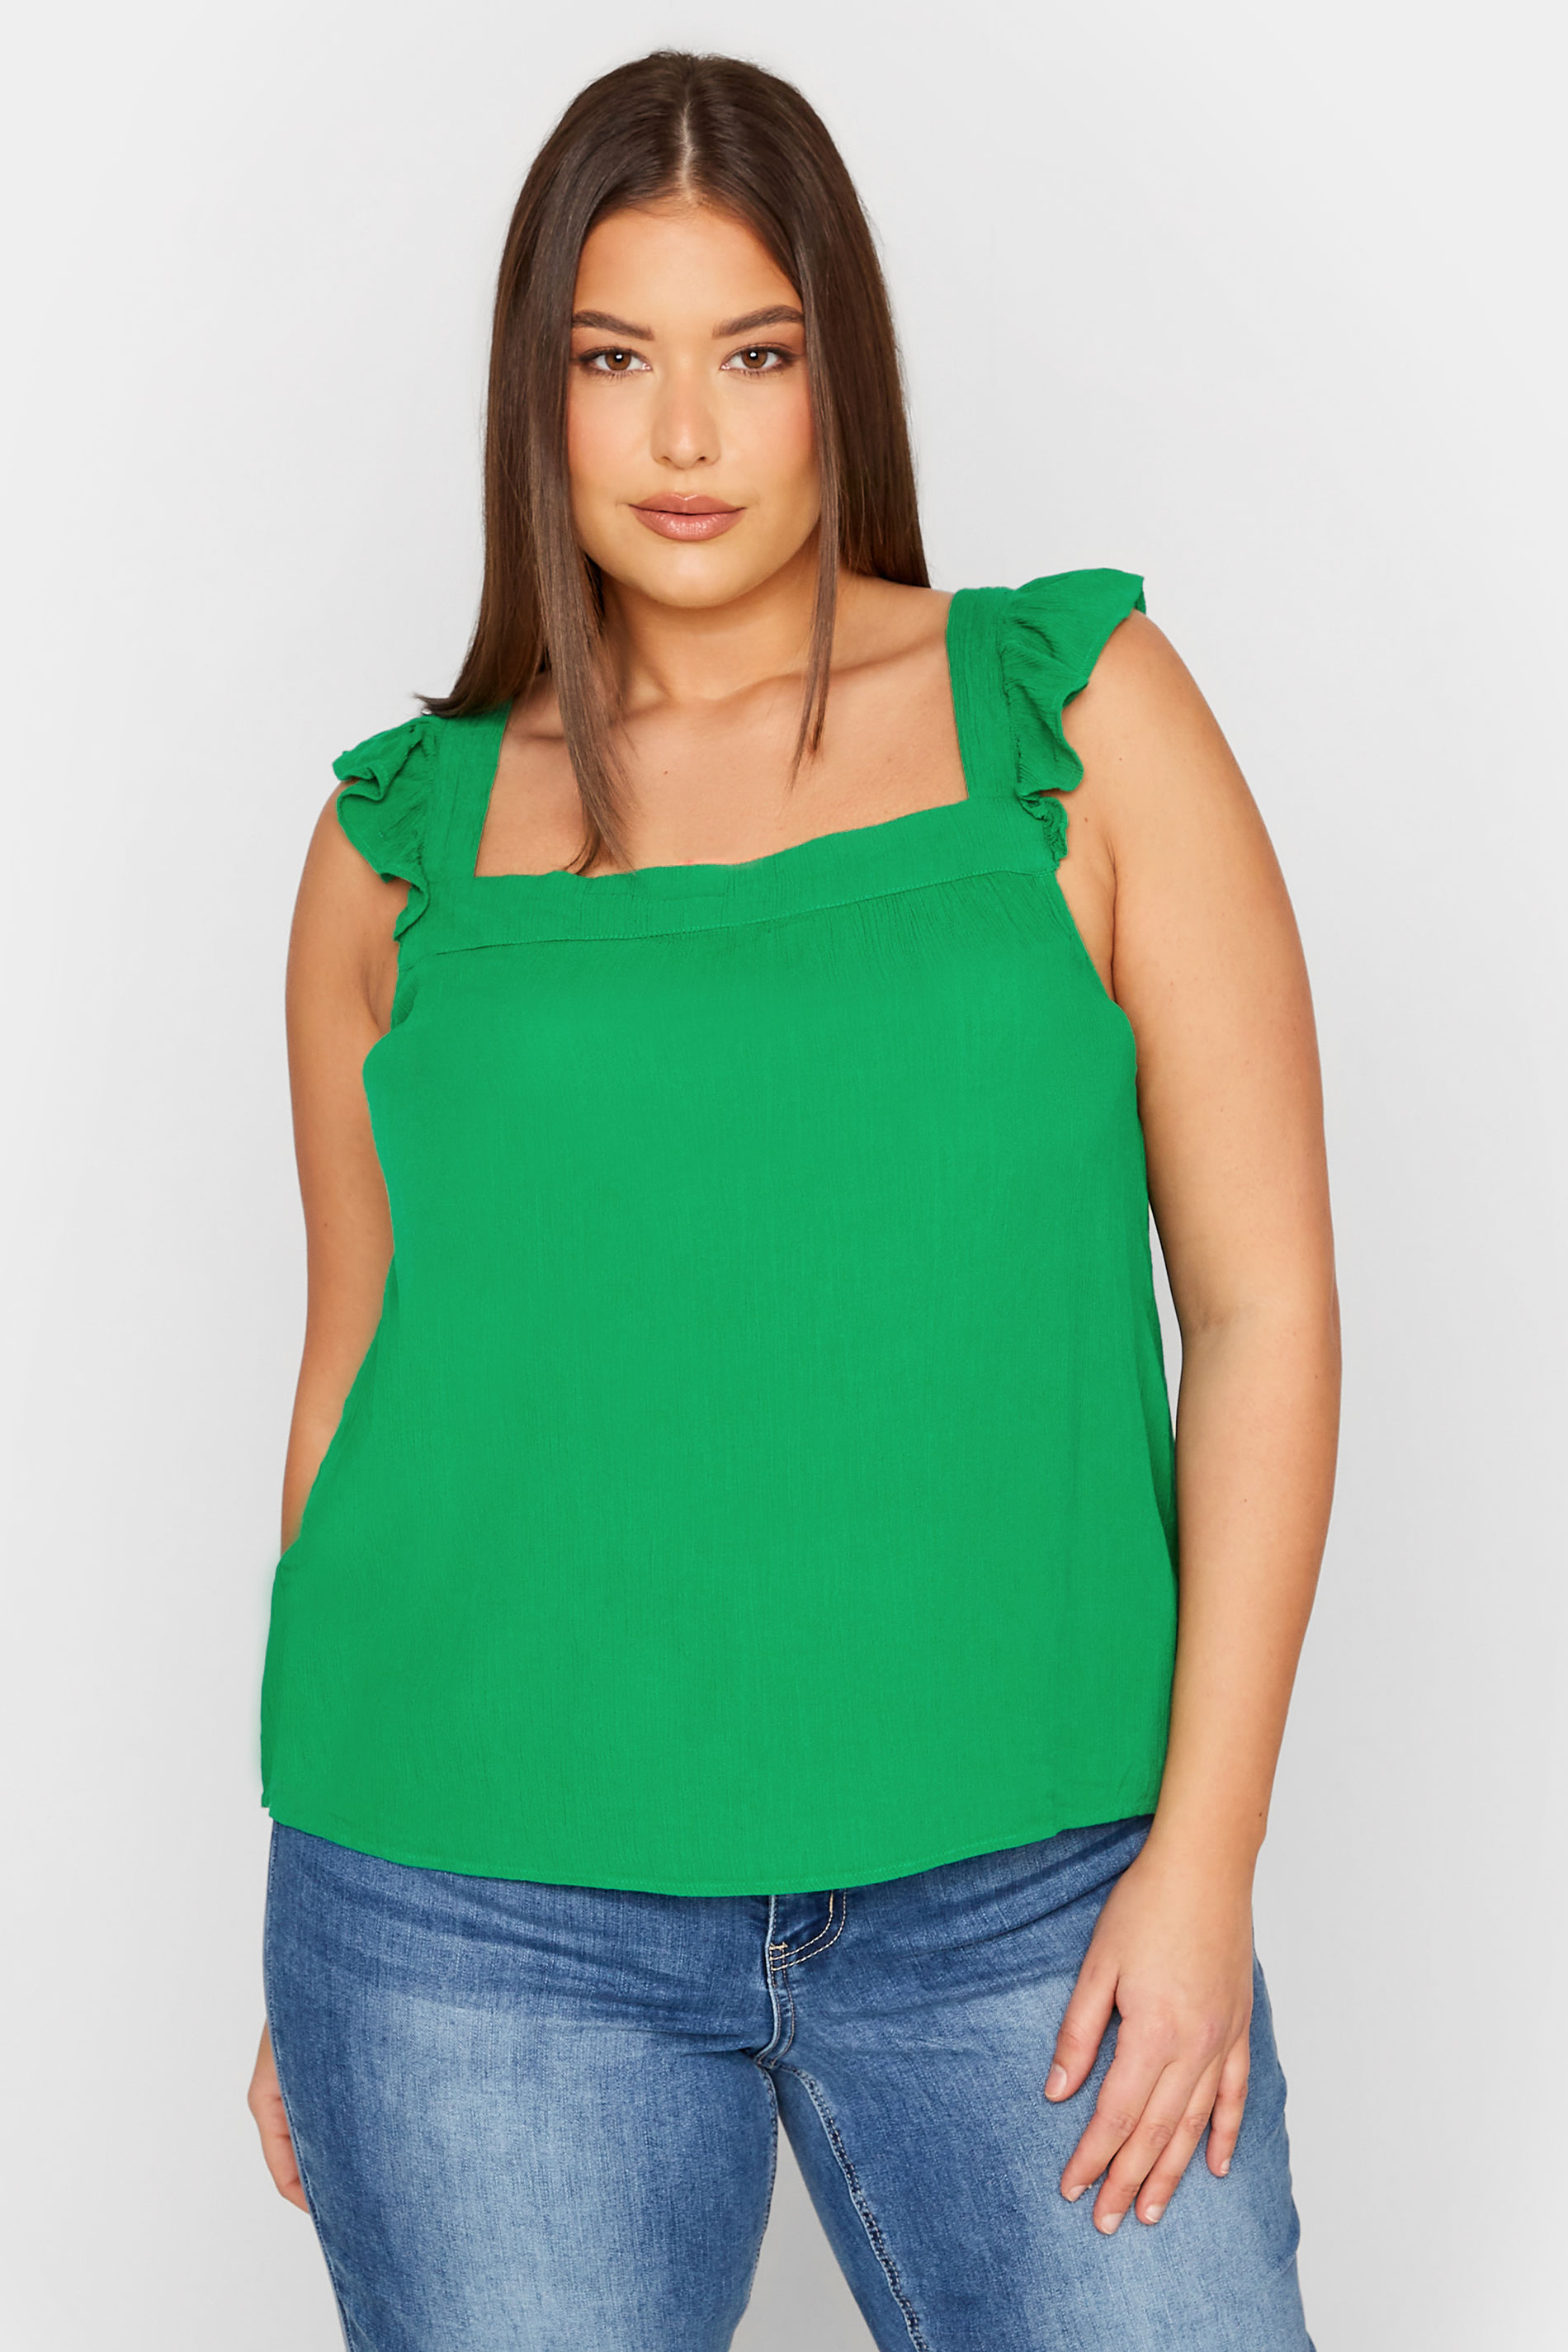 LTS Tall Women's Green Crinkle Frill Top | Long Tall Sally 1